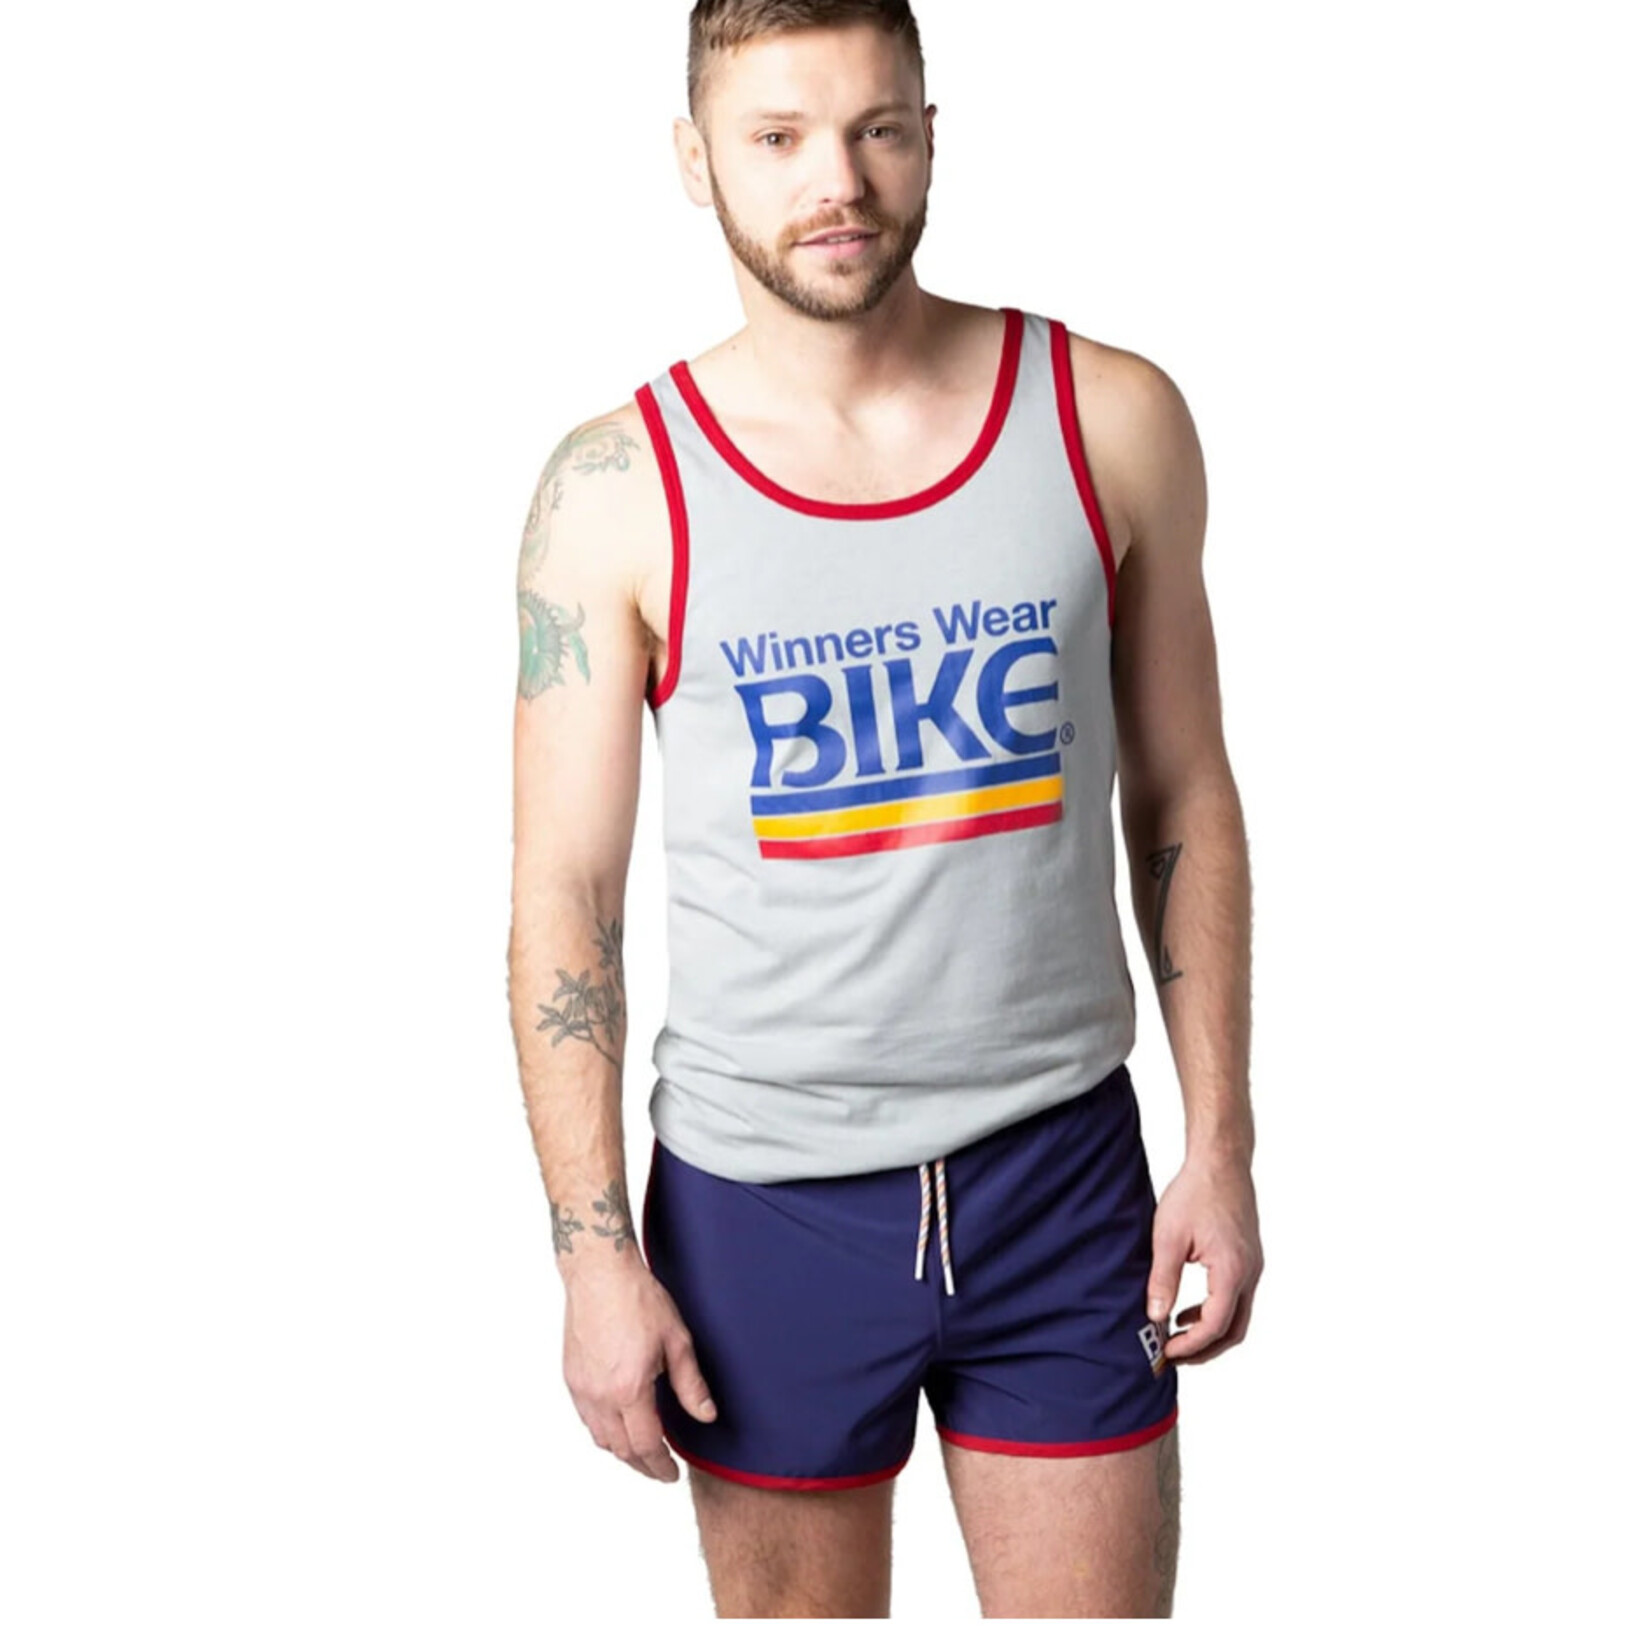 Bike Athletic BIKE Athletic Logo Ringer Tank Top-“ Winners Wear Bike”